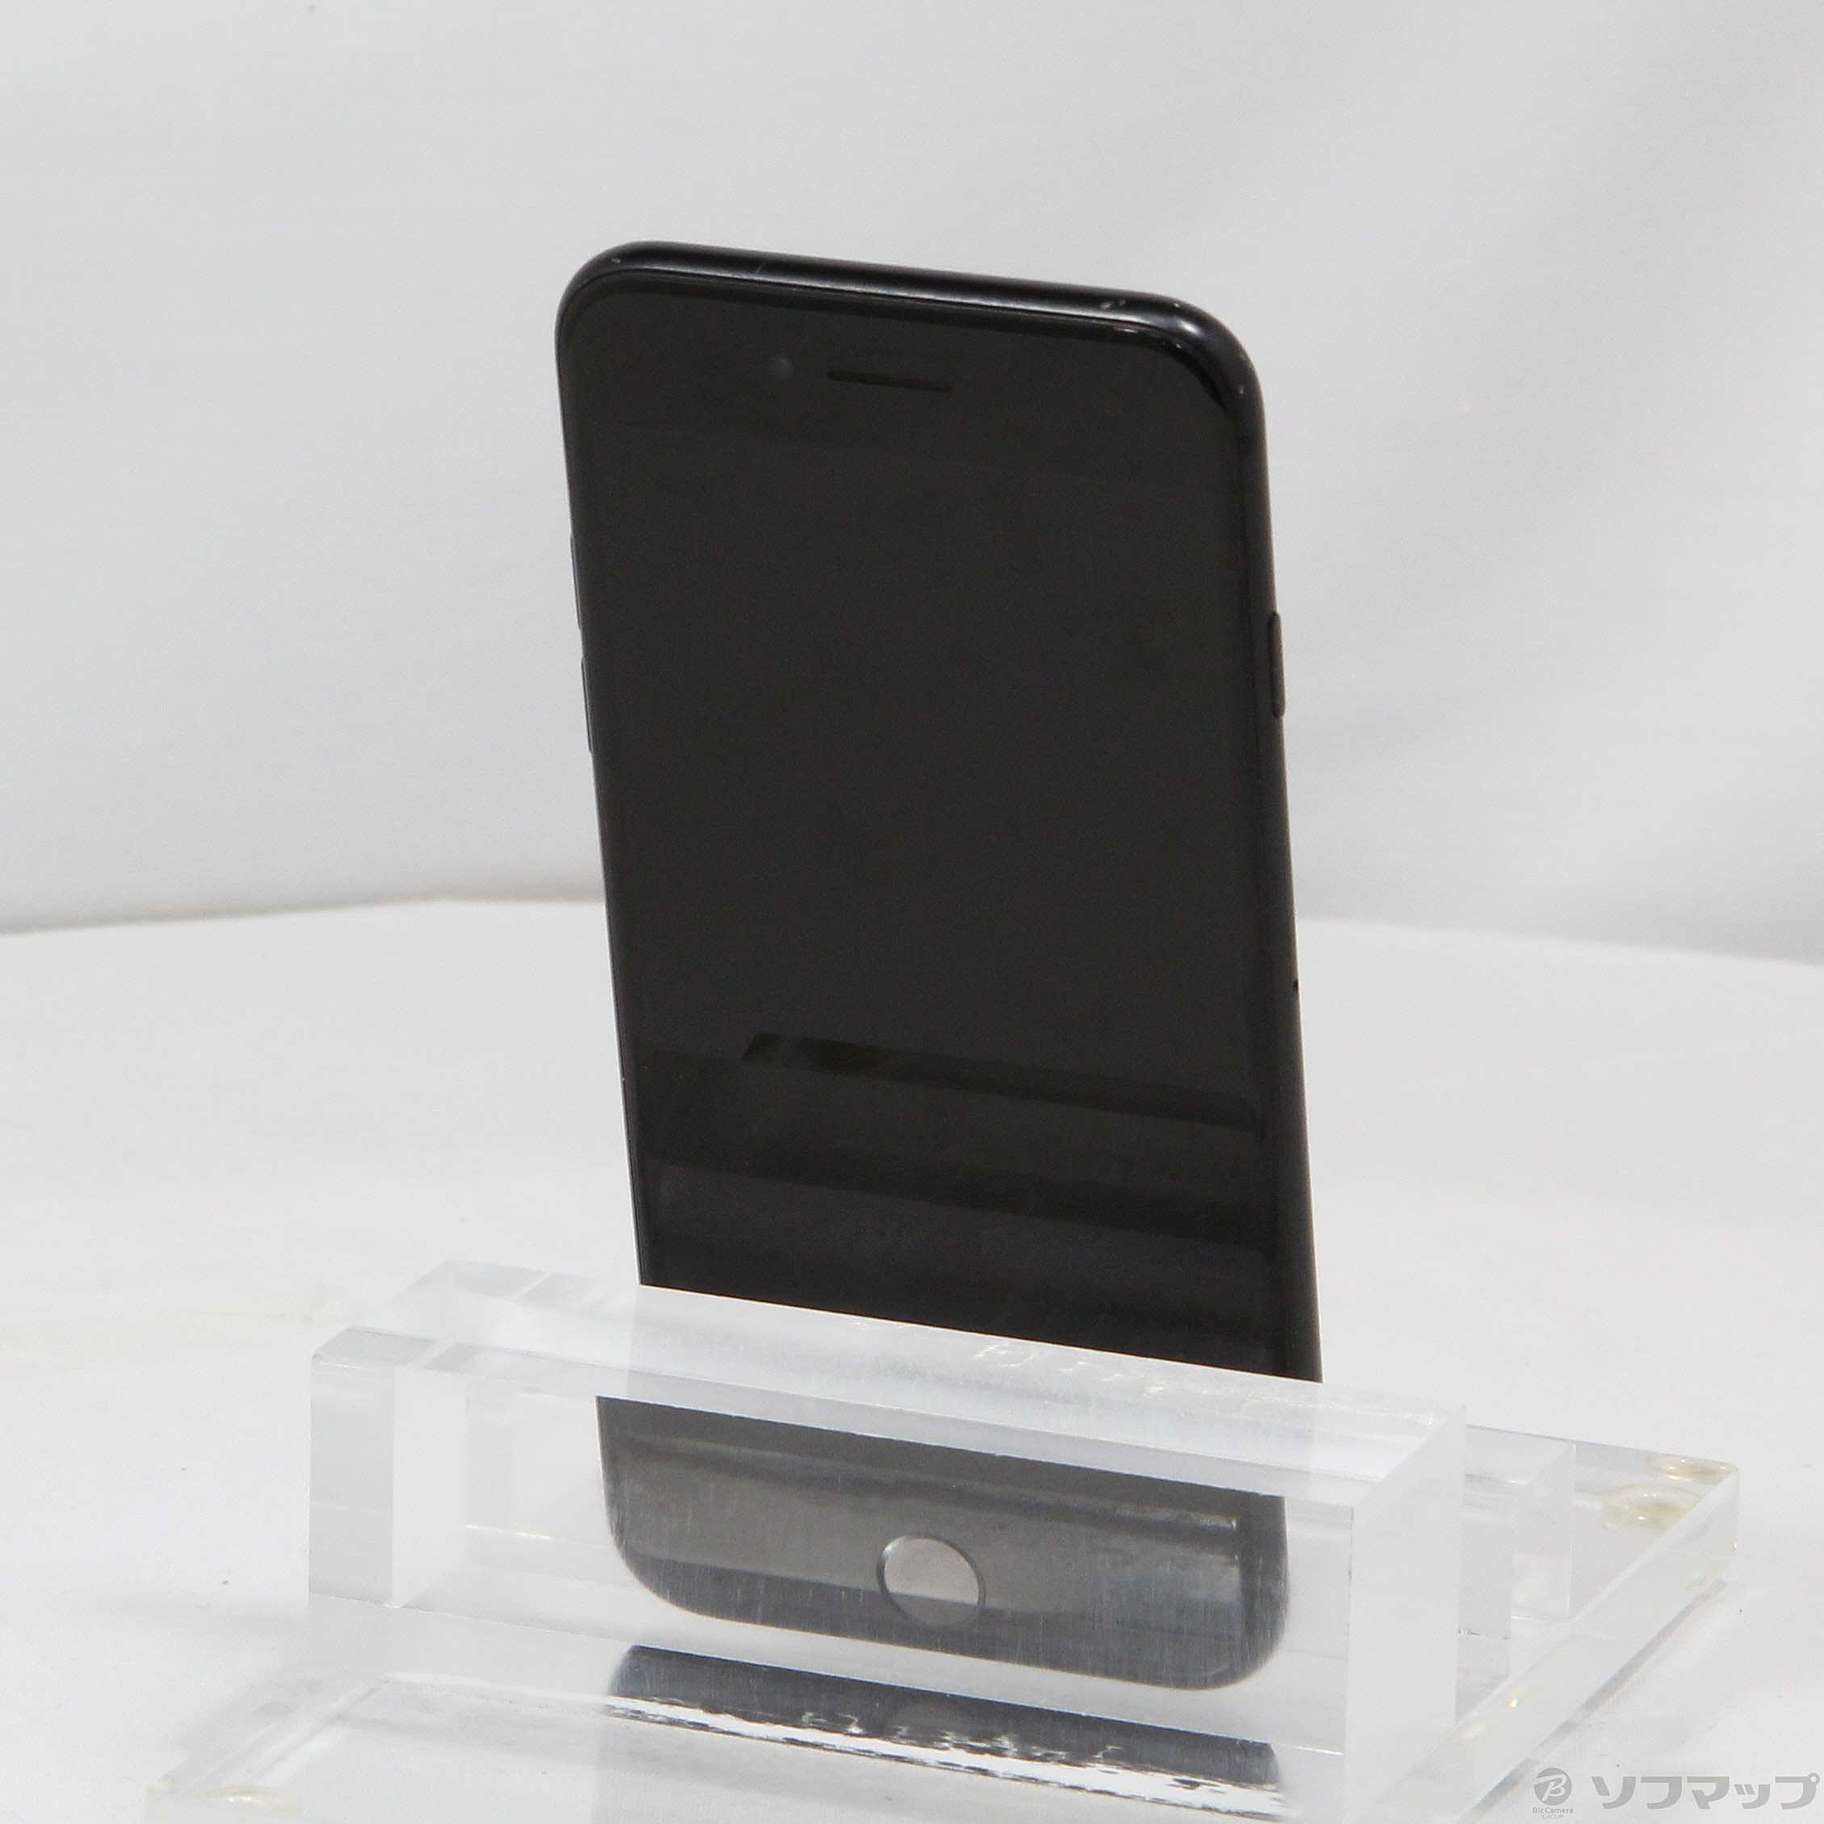 NEW国産SoftBank MHGP3J/A iPhone SE(第2世代) 64GB ブラック SB iPhone